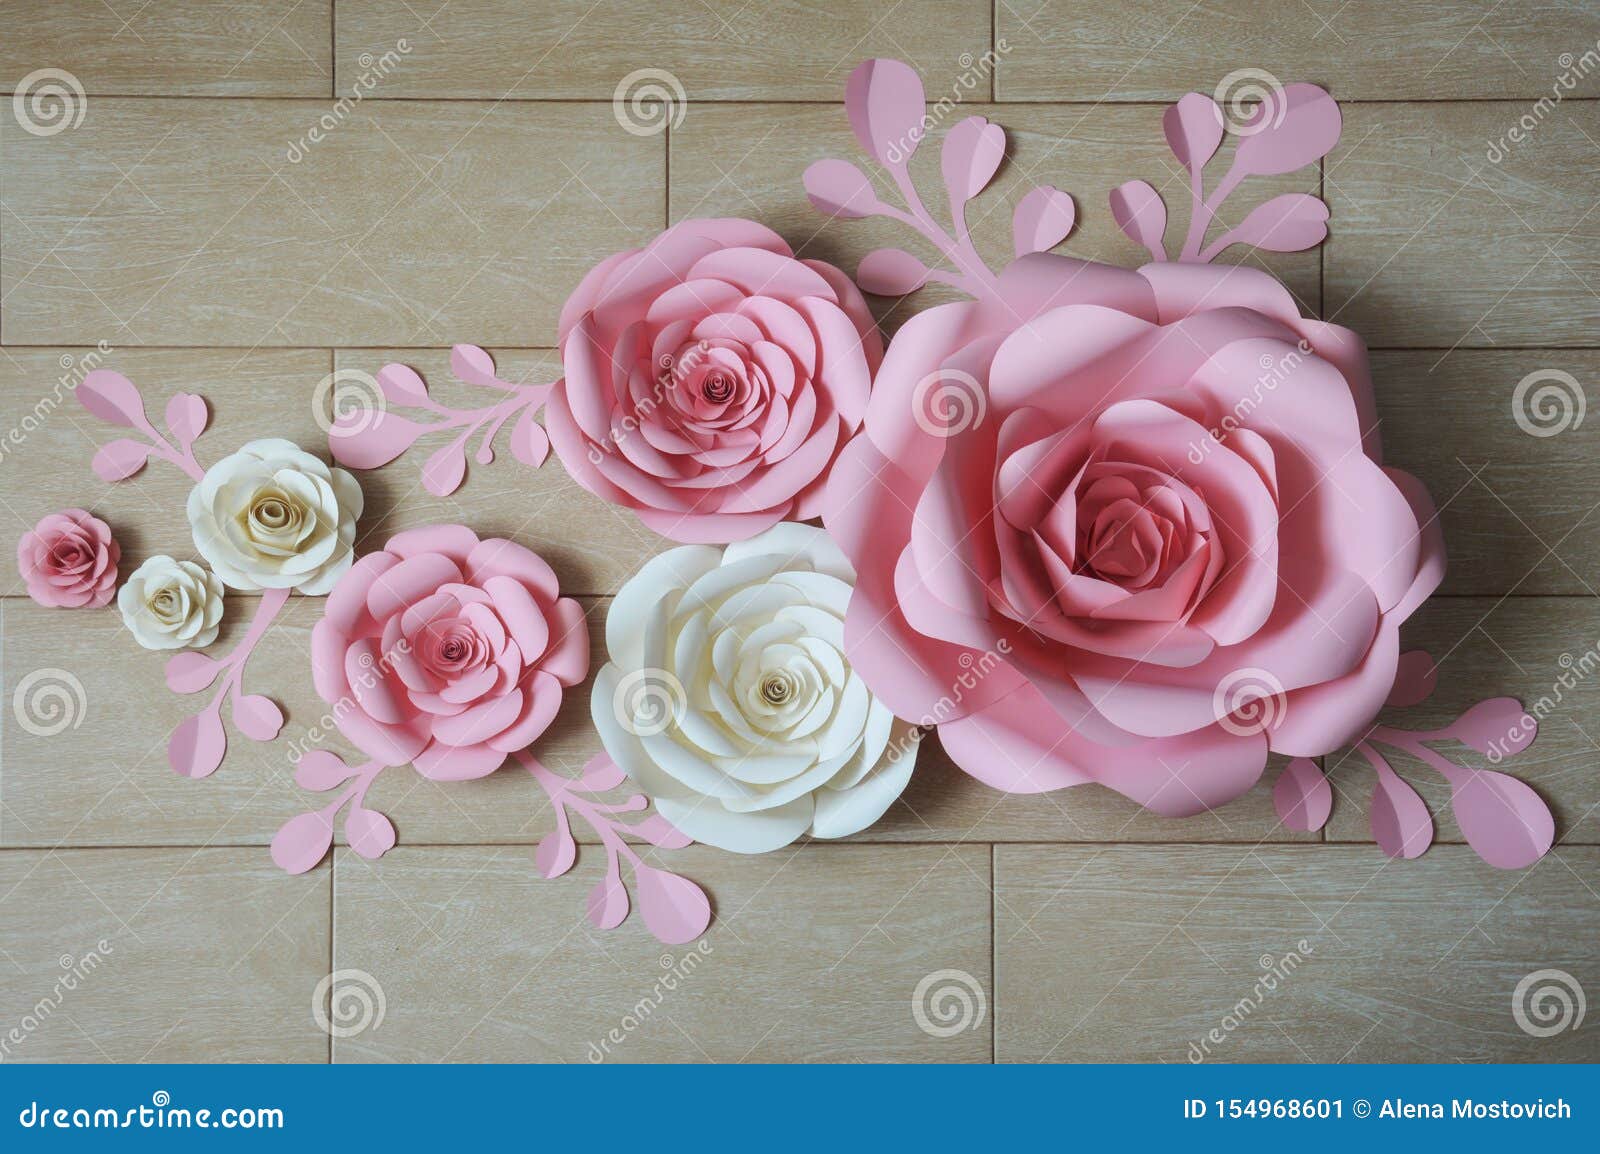 Flor de papel / Paper flower  Flores de papel hechas a mano, Decoración de  flores de papel, Decoración de pared de flores